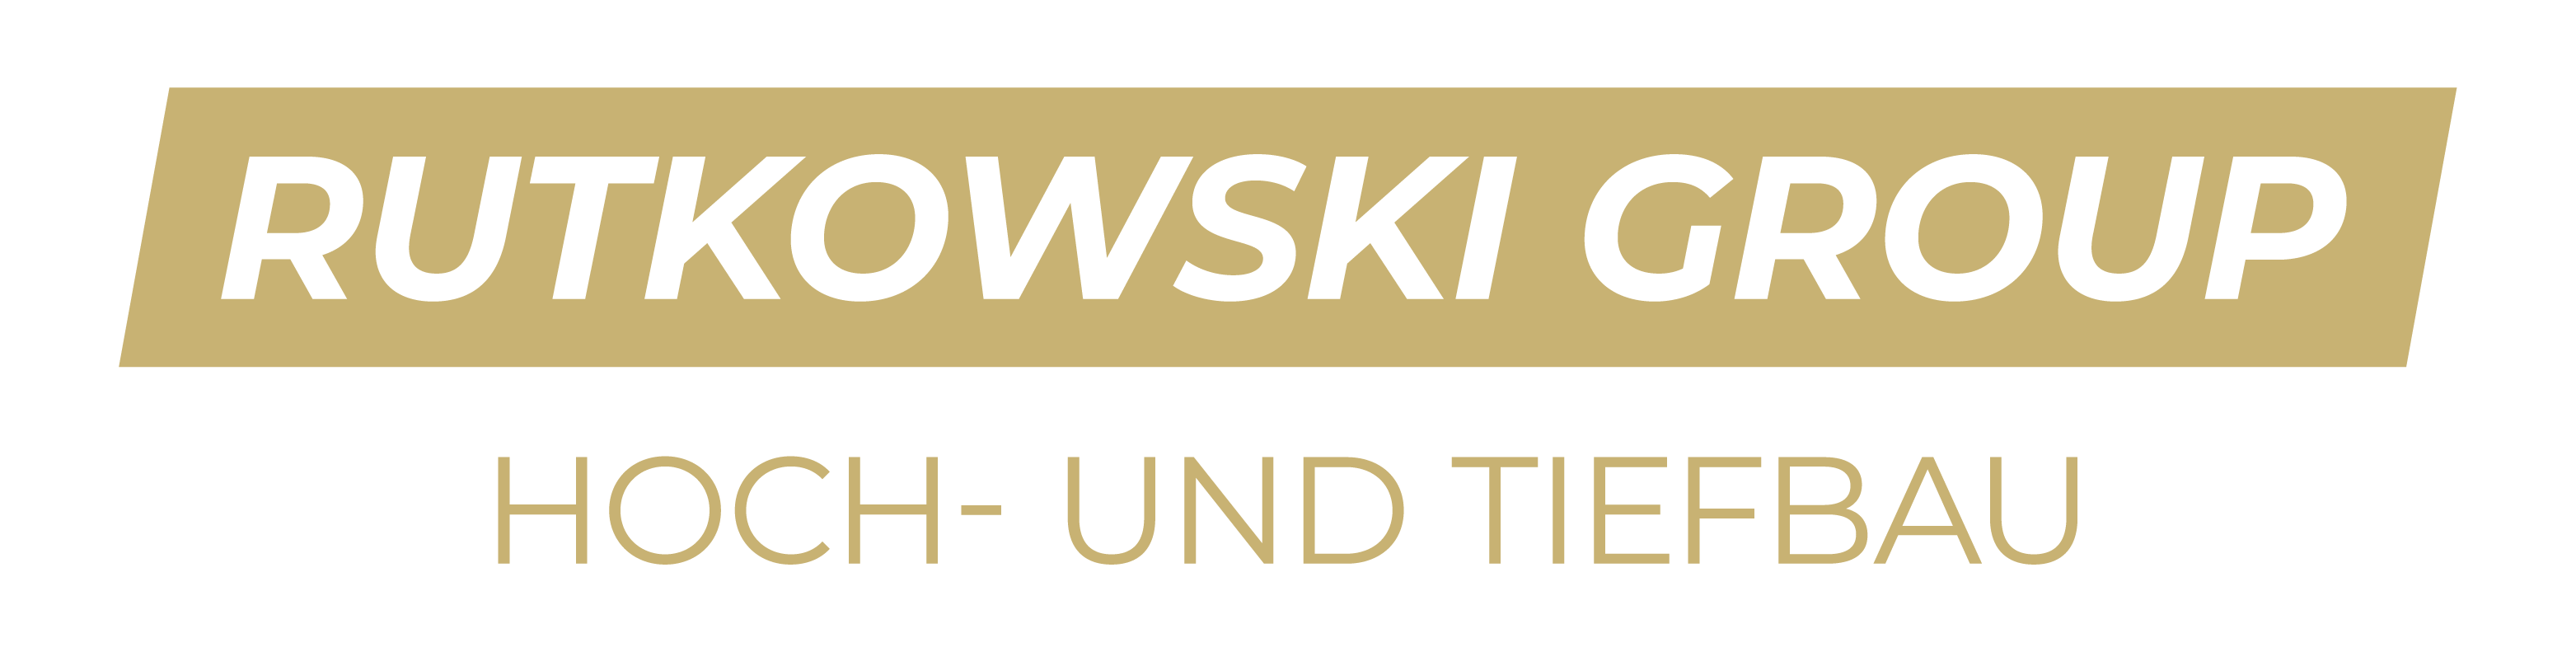 Logo Wortbildmarke der Rutkowski Group